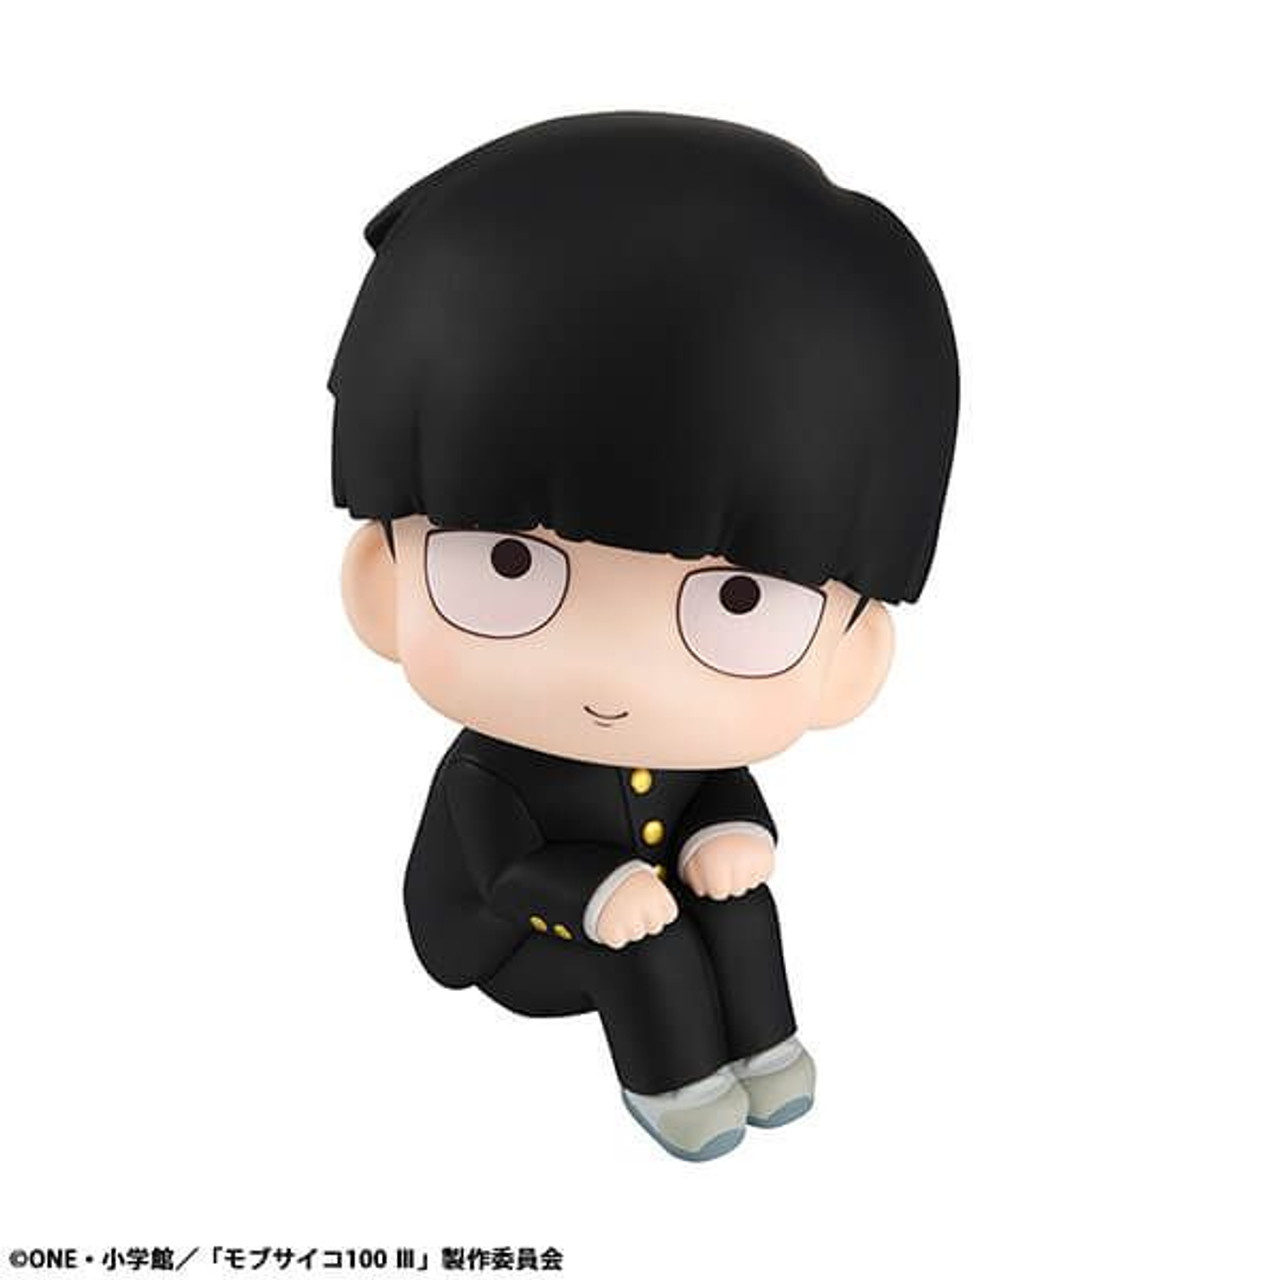 Shigeo Kageyama Mob Psycho 100 III Nendoroid Figure